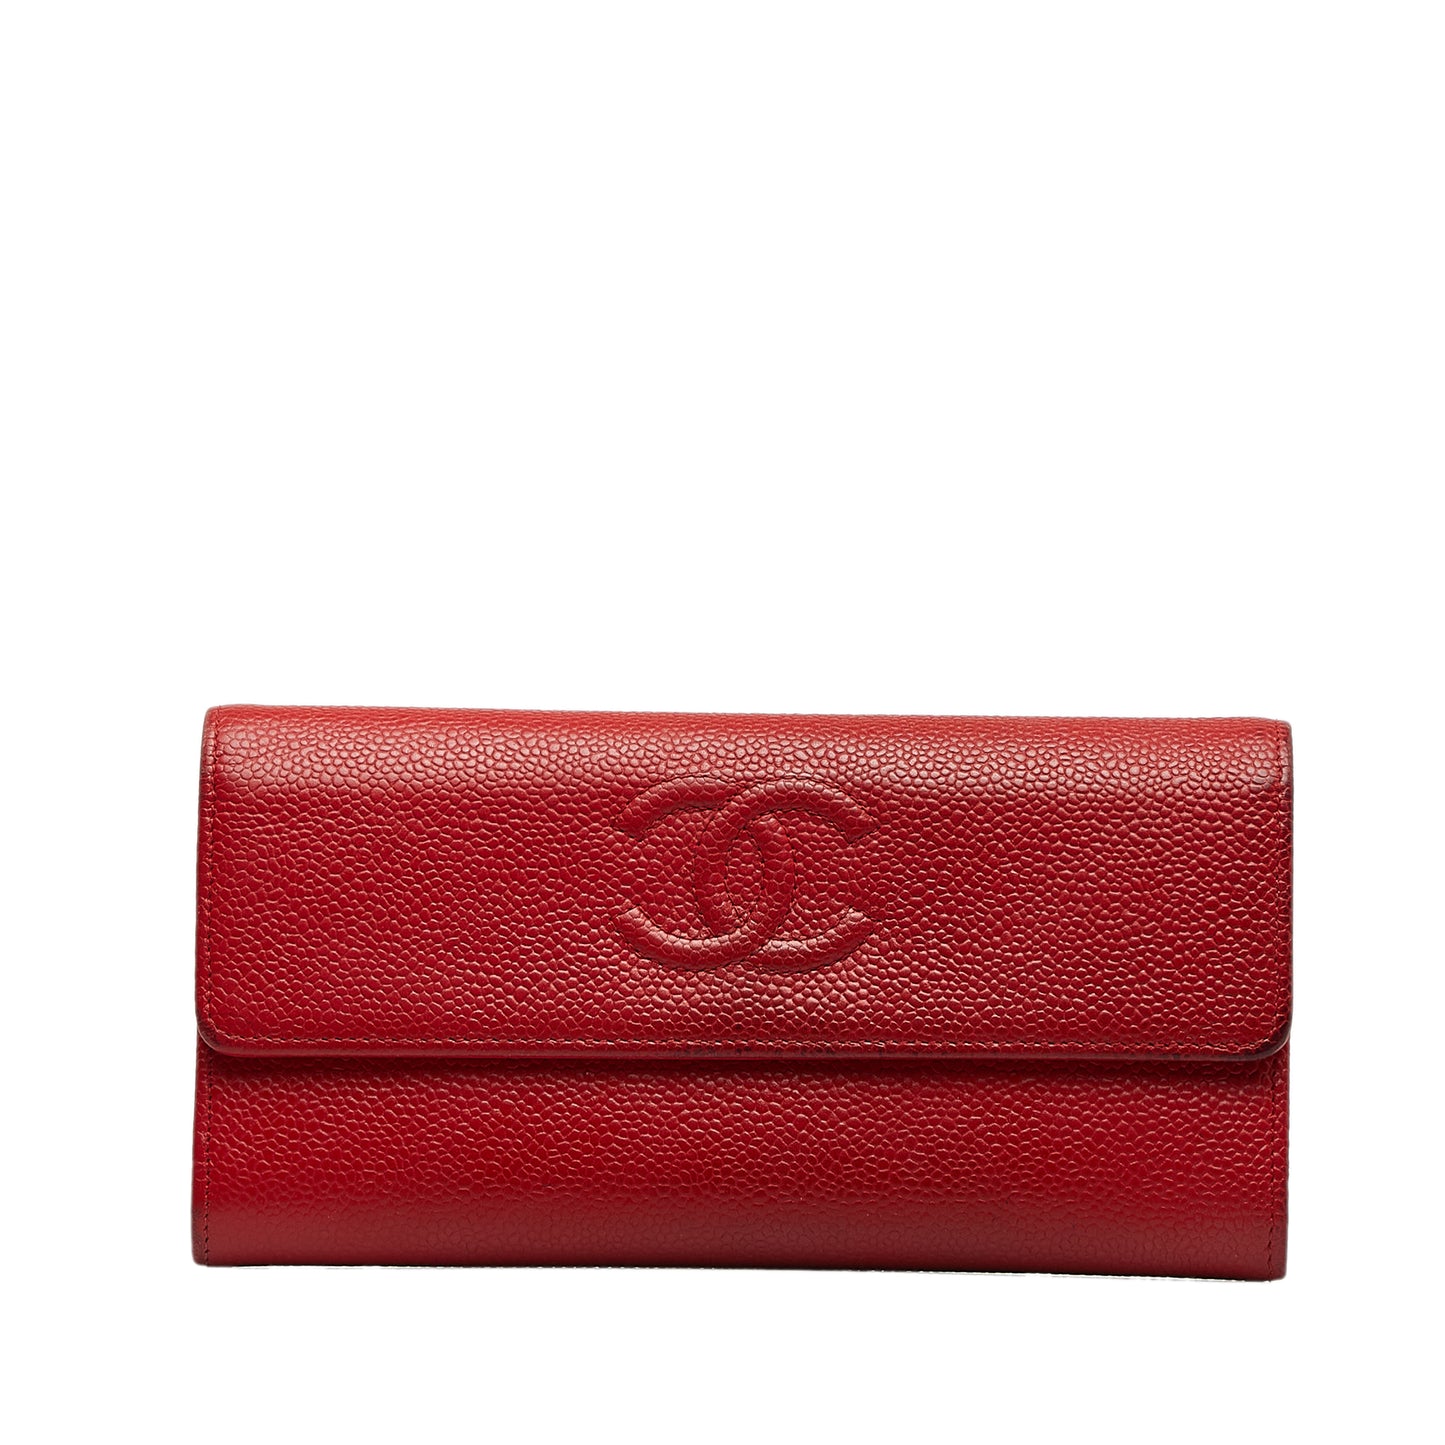 CC Caviar Leather Long Wallet Red - Gaby Paris